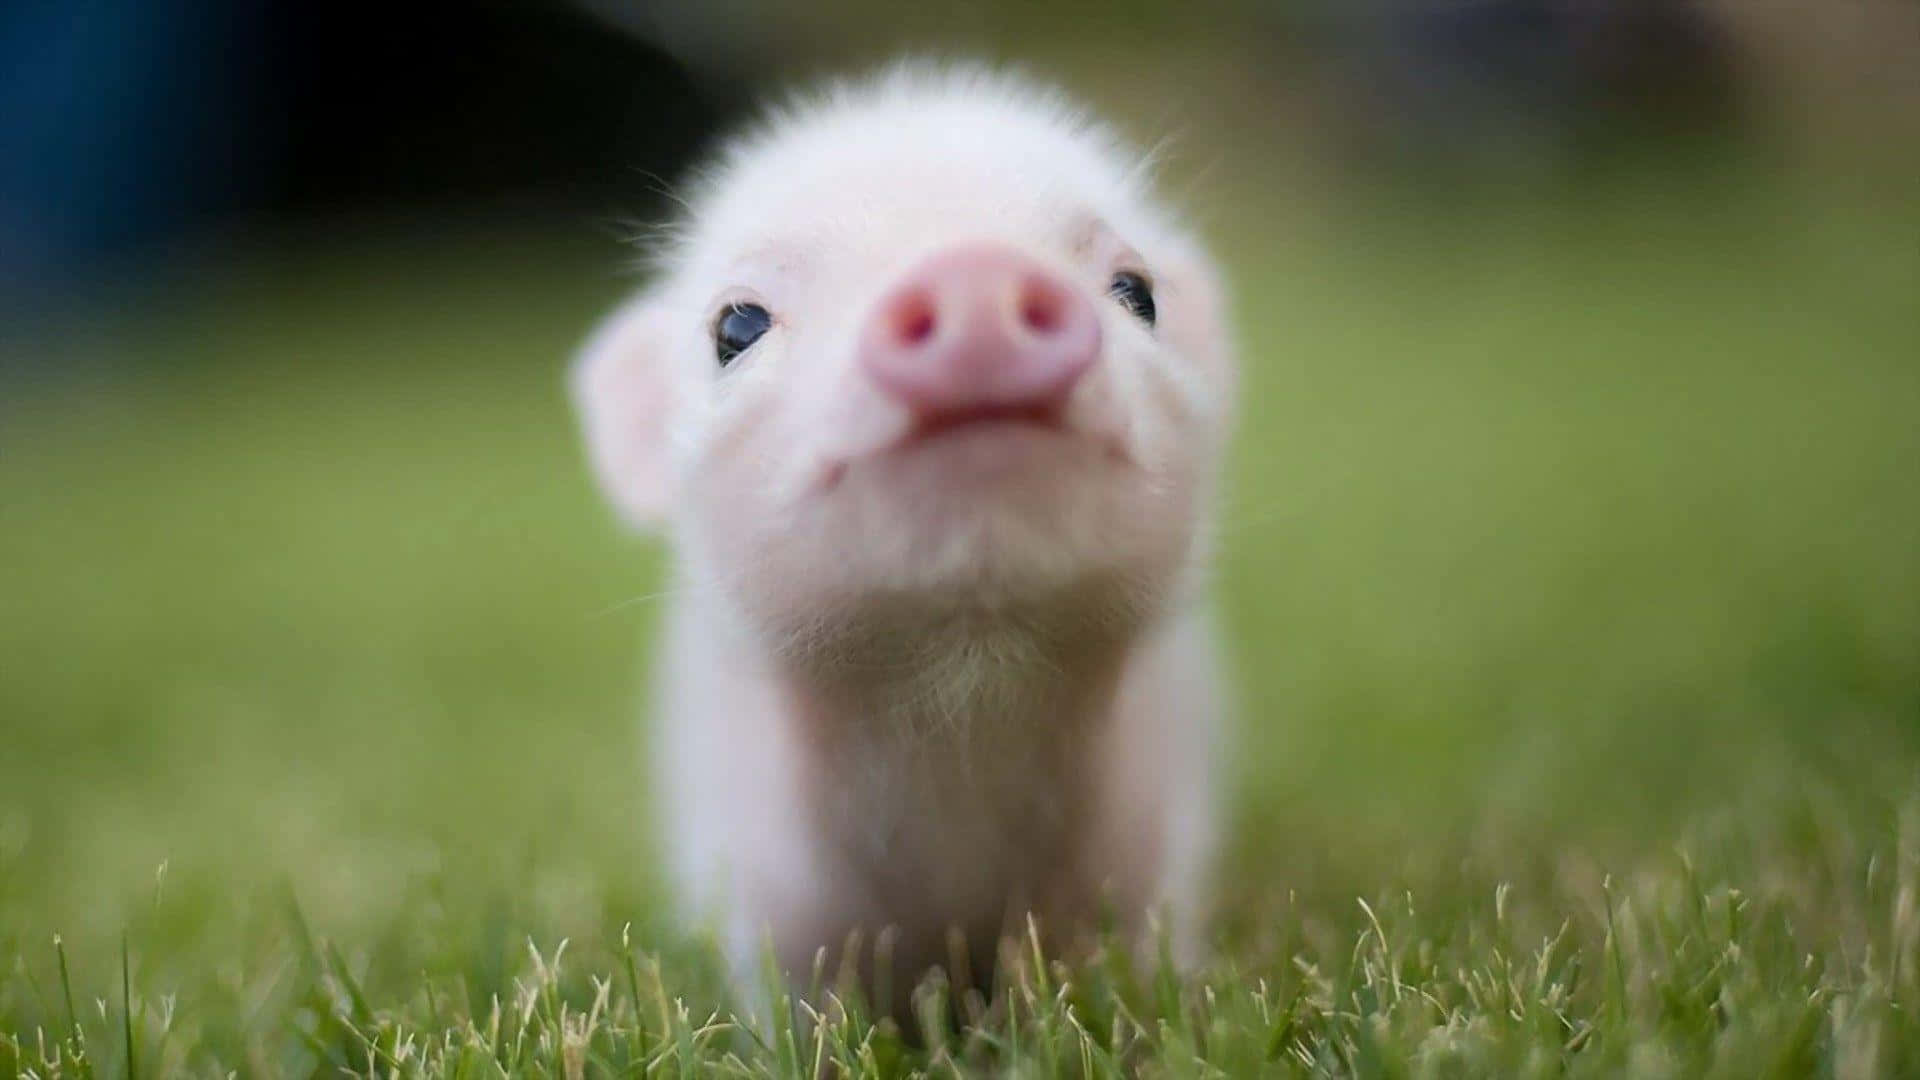 Super cute piggy inspires savings